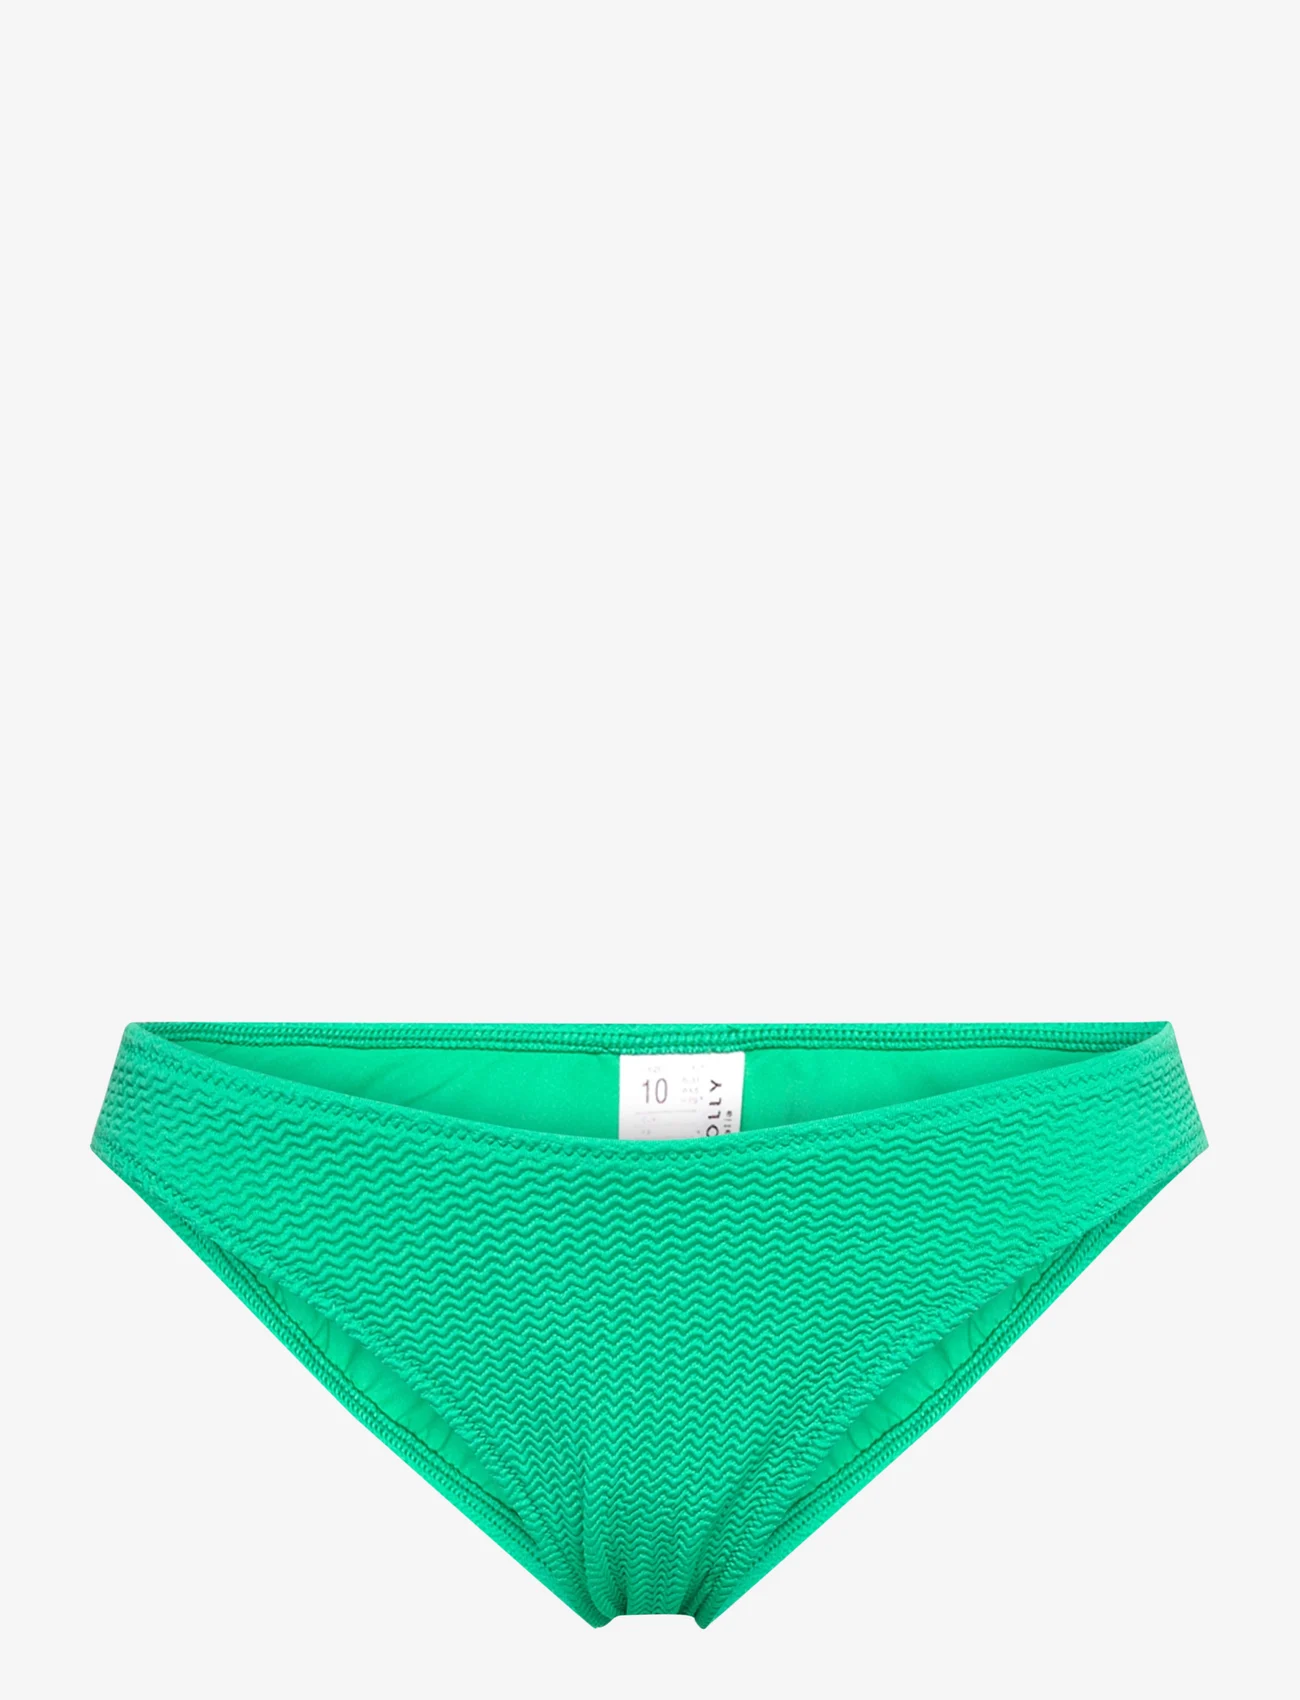 Seafolly - SeaDive High Cut Pant - bikini truser - jade - 0